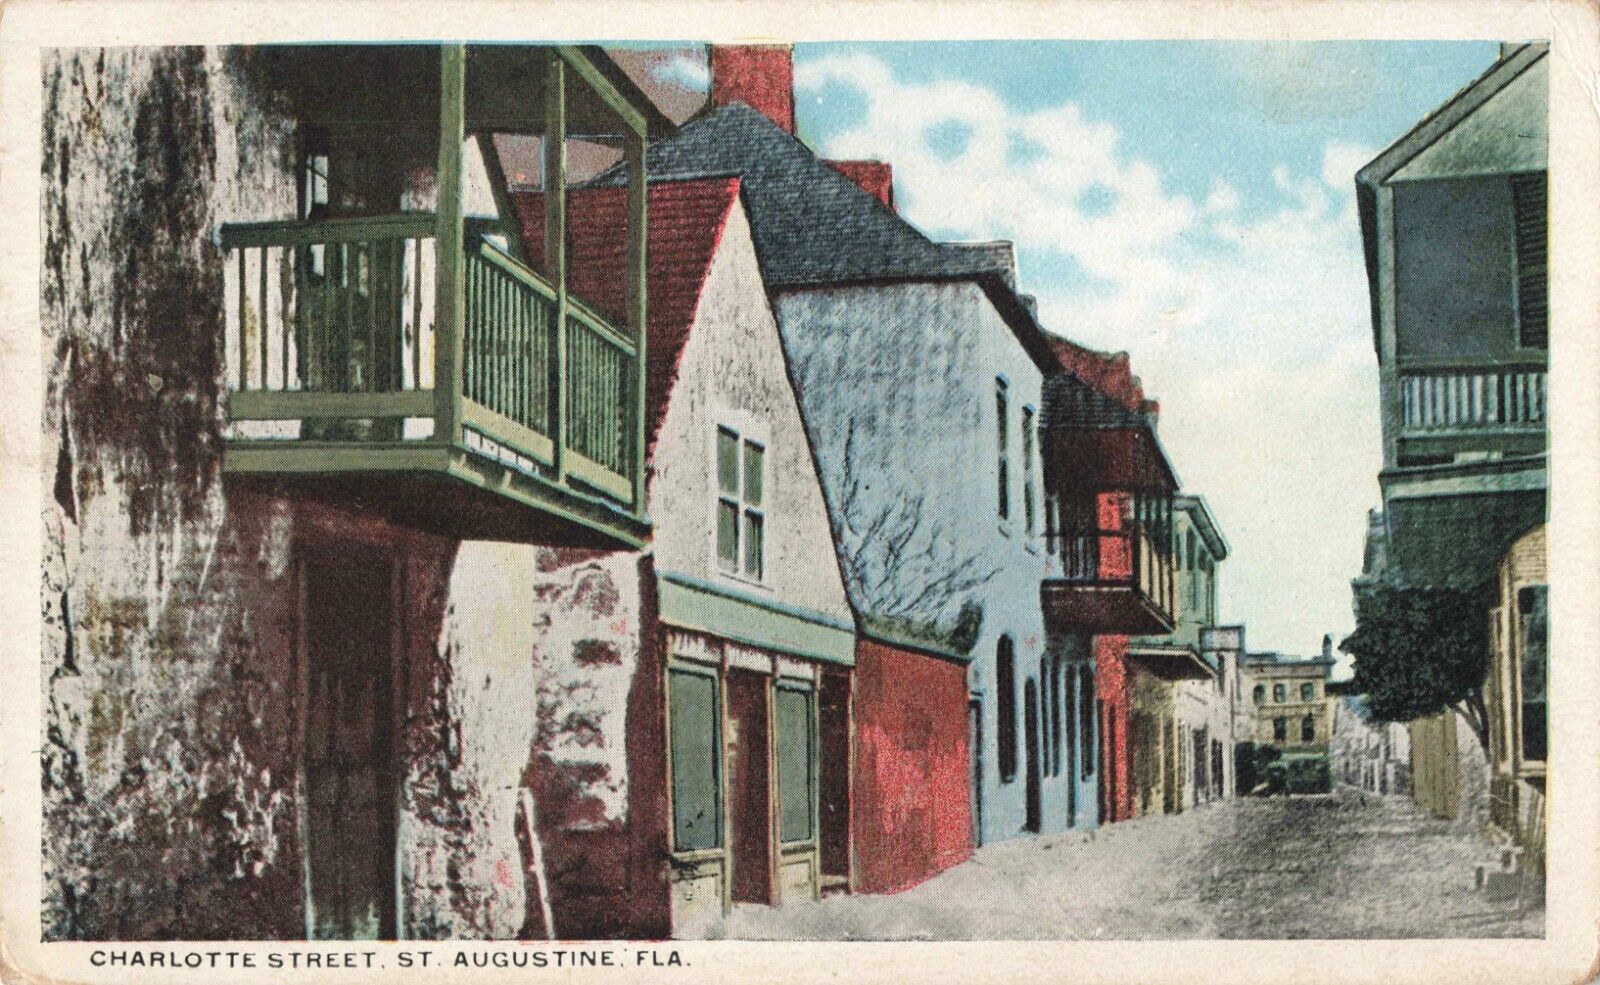 St Augustine Florida, Charlotte Street View, Coquina Balconies, Vintage Postcard